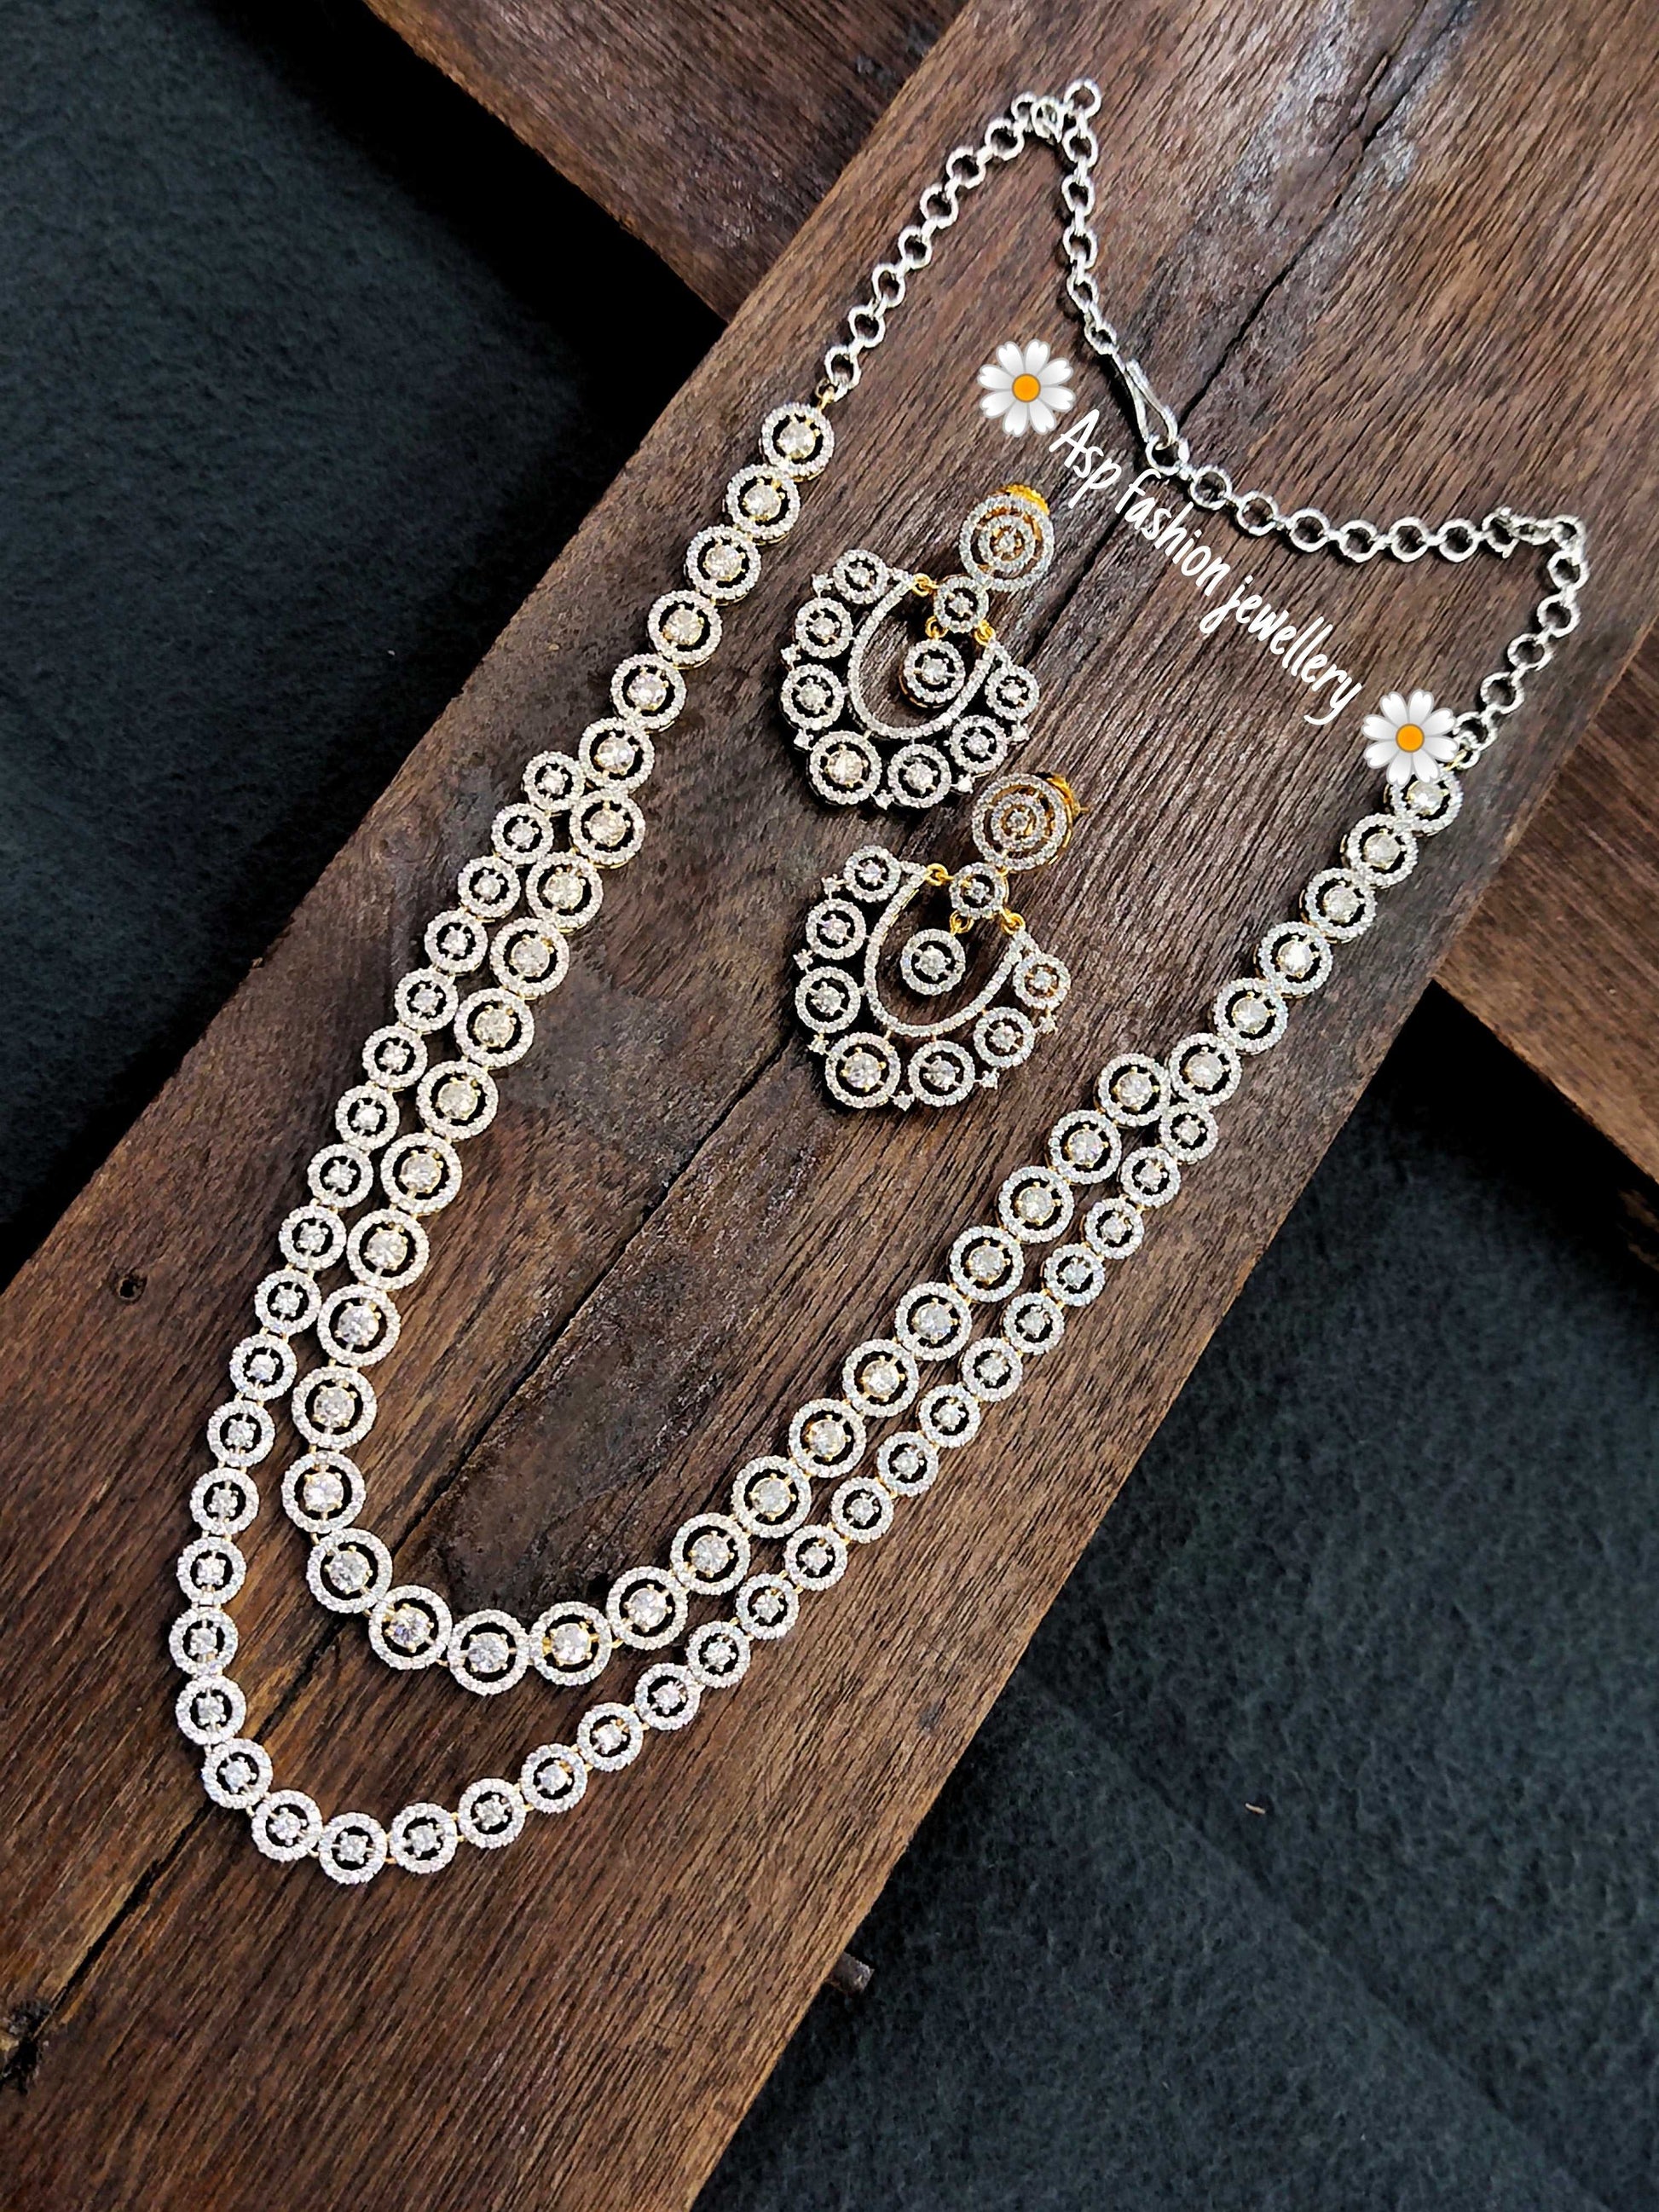 Beautiful American Diamonds two layer necklace set